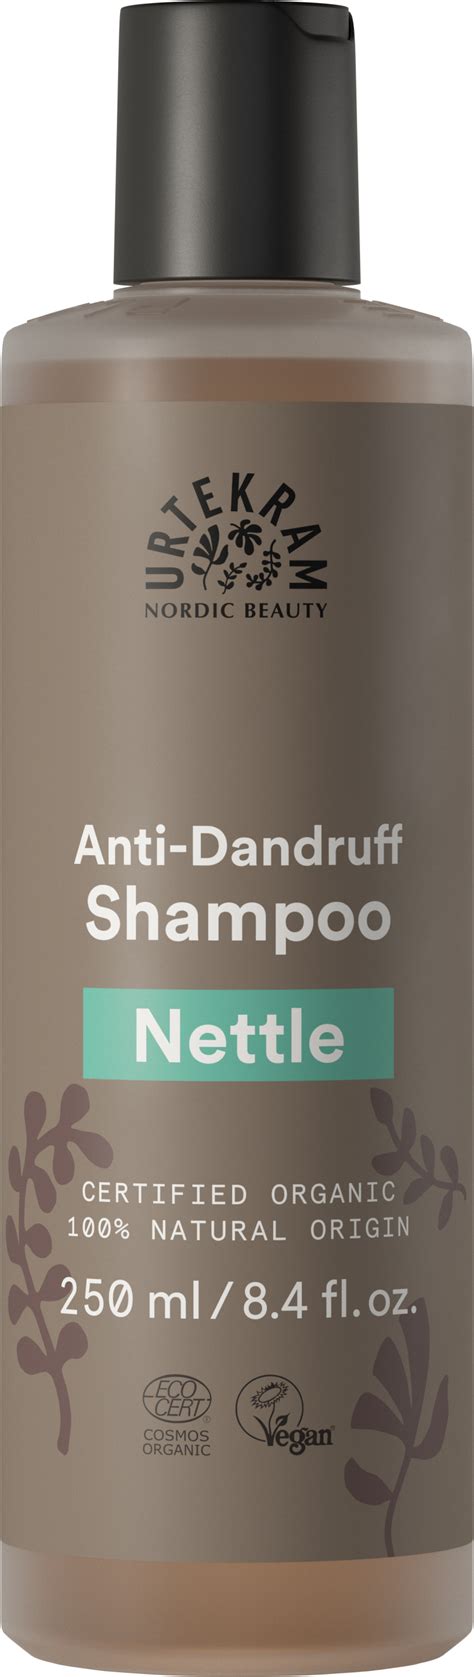 Nettle Shampoo Anti Dandruff